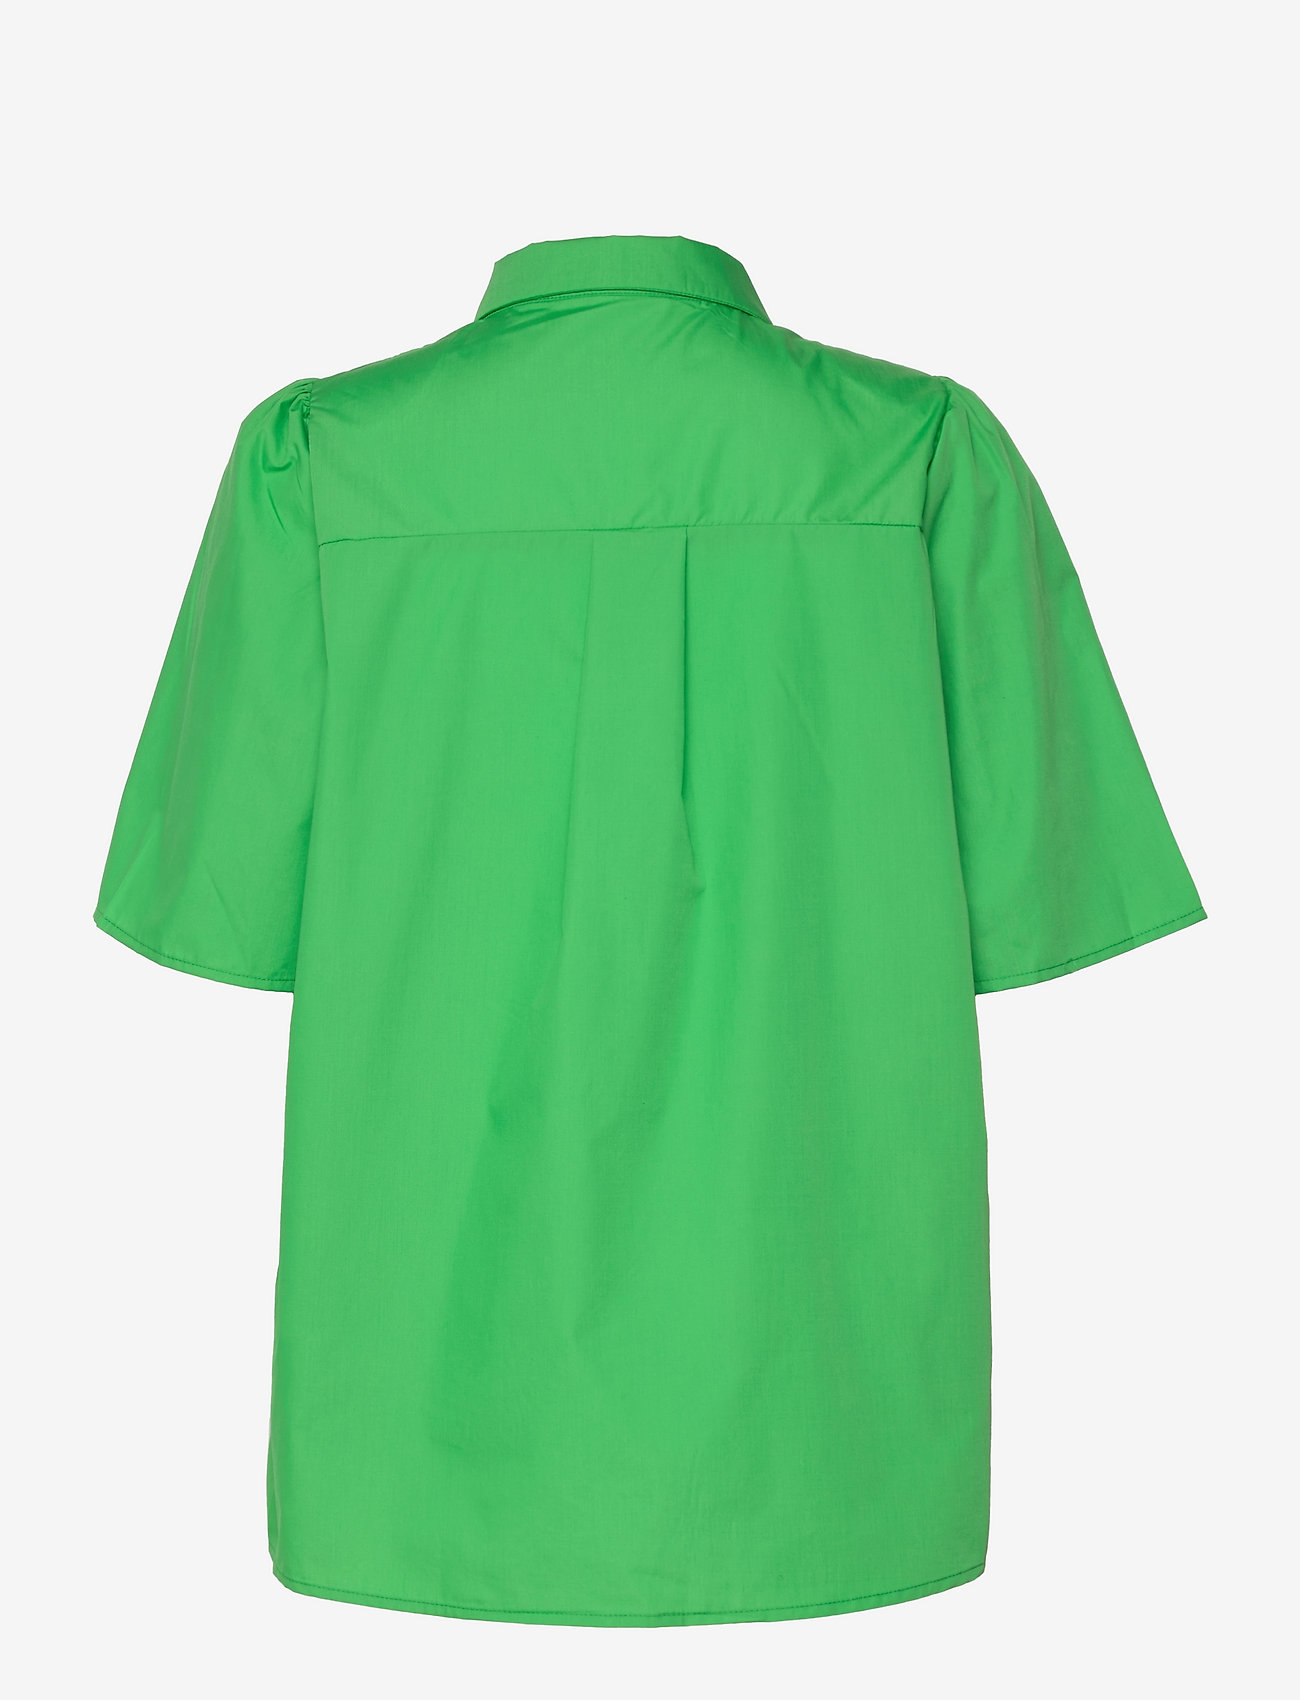 Vila - VIGRATE S/S SHIRT - short-sleeved shirts - kelly green - 1